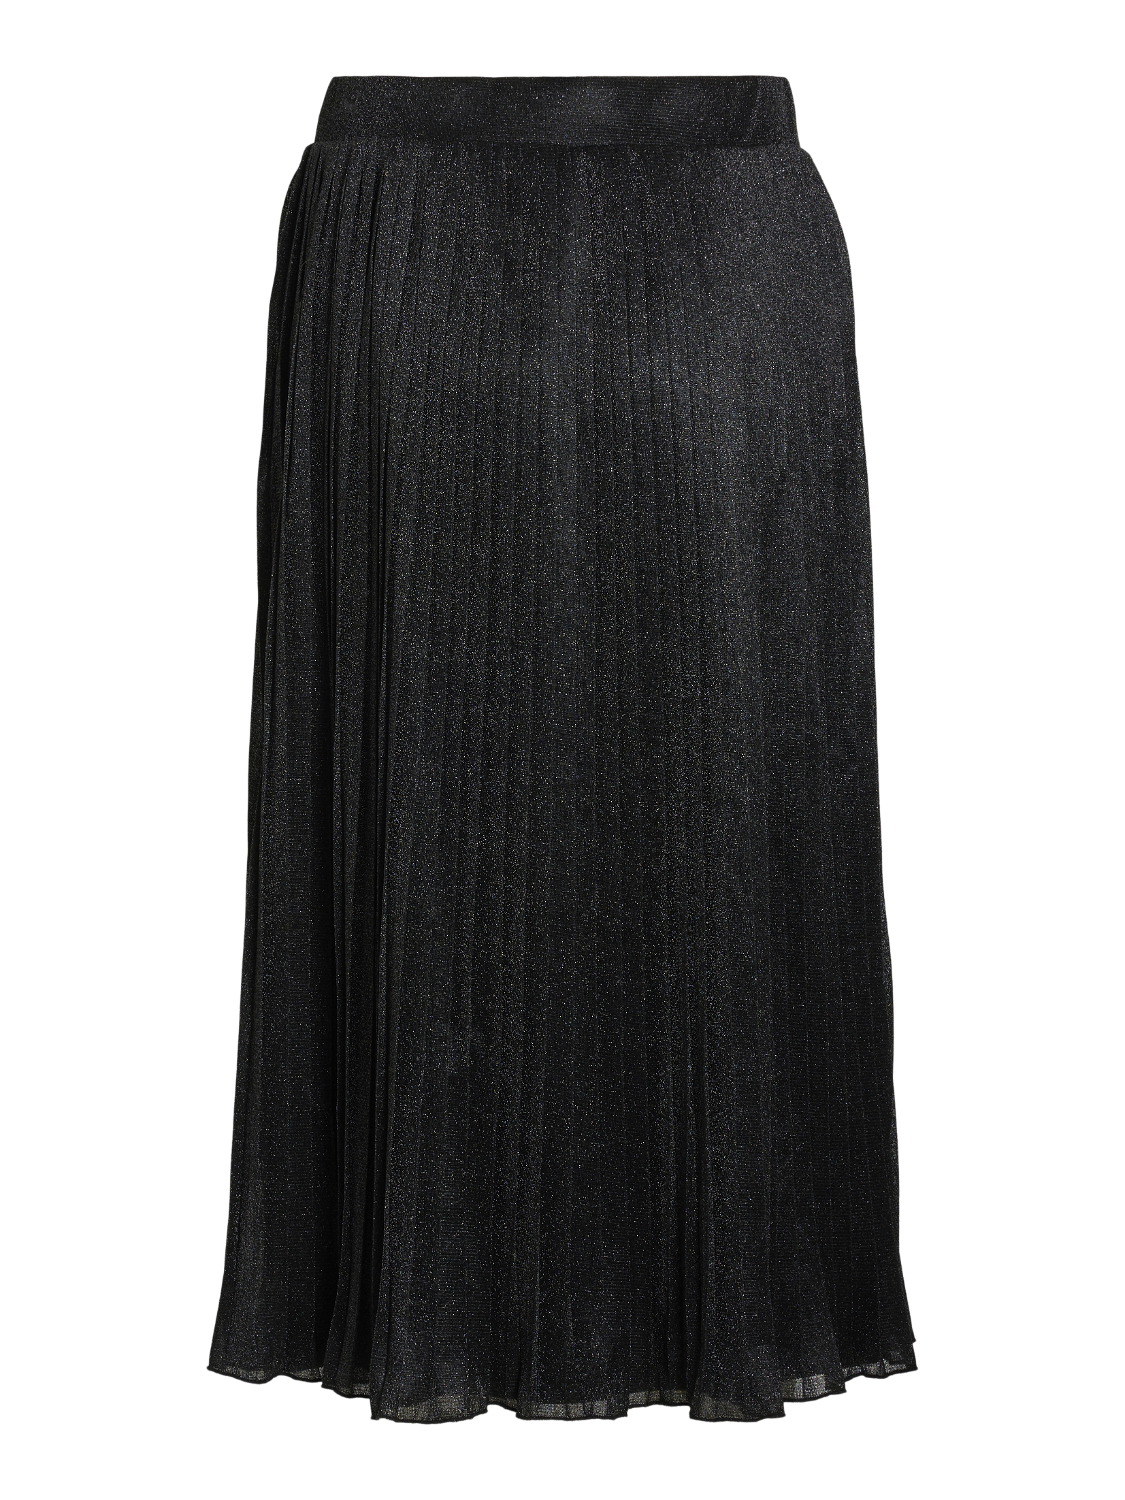 VIWINDY Skirt - Black